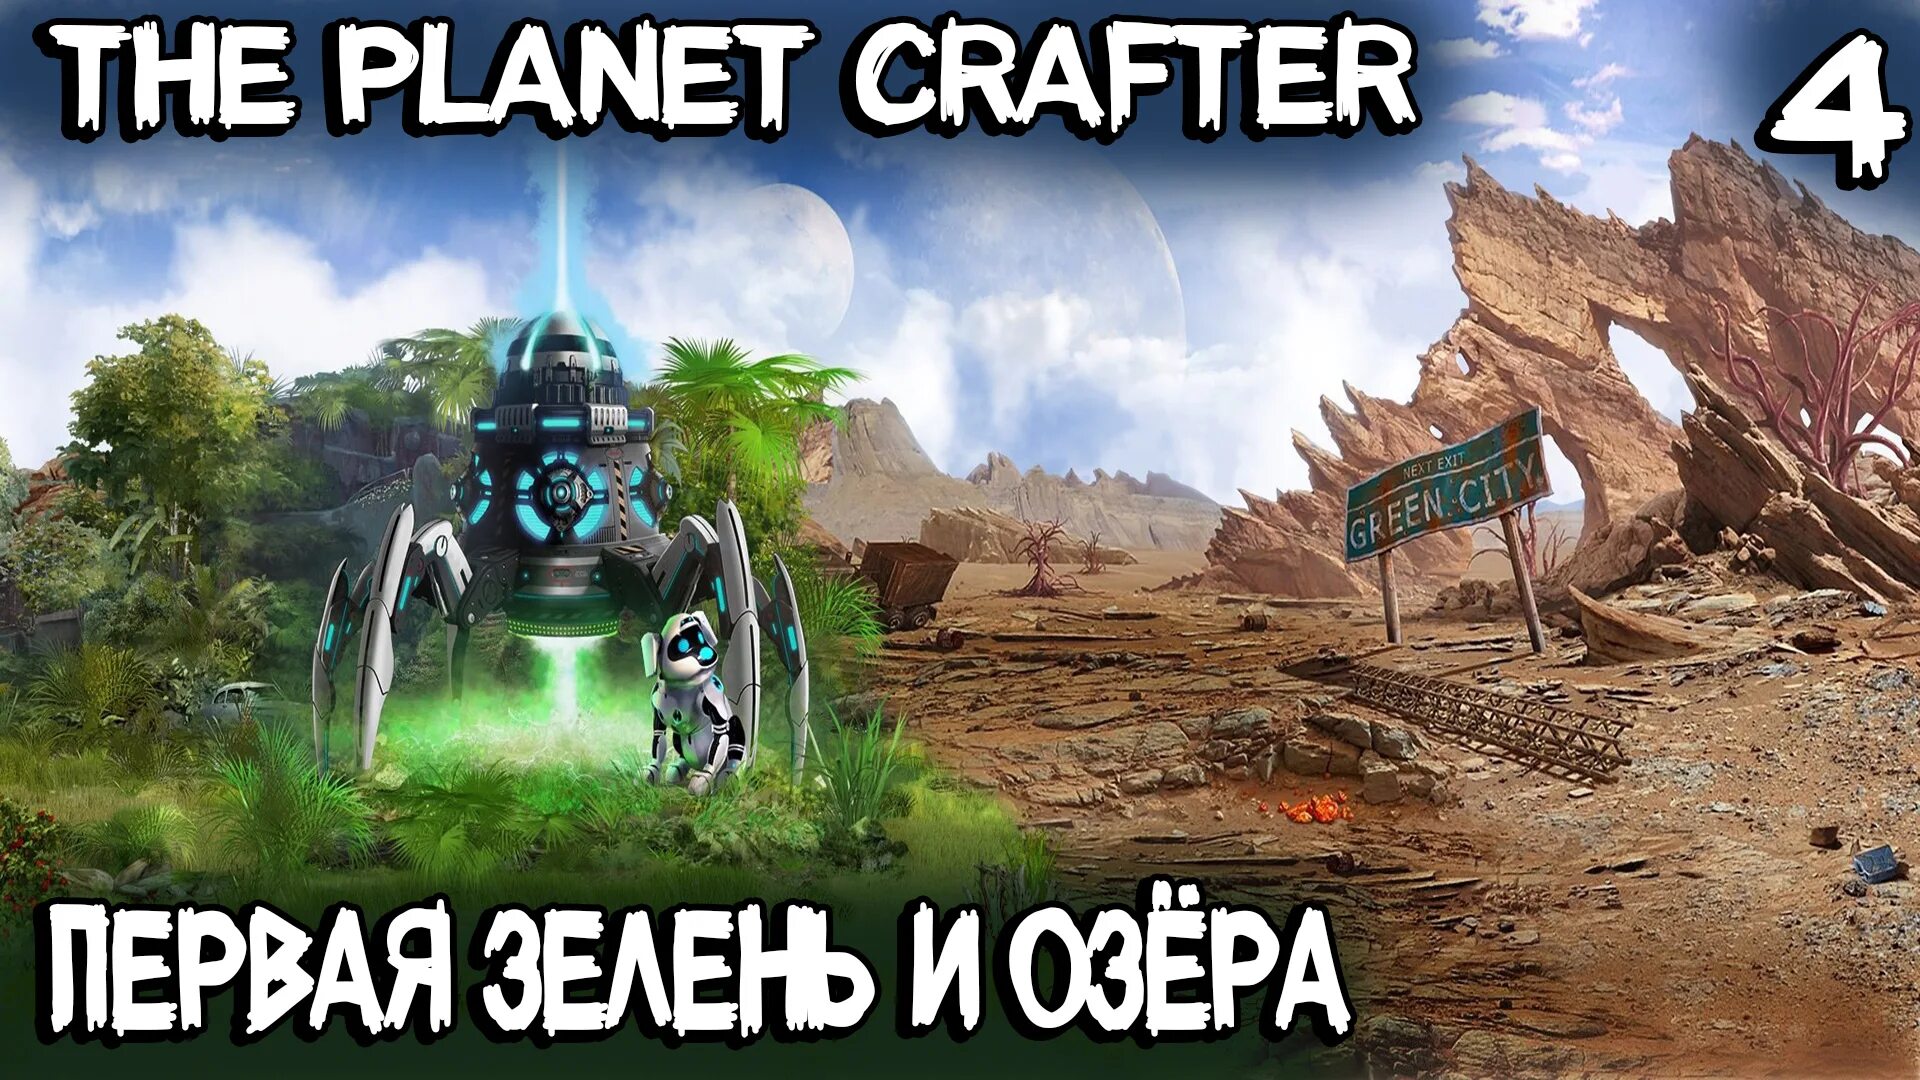 Planet crafter где уран. Planet Crafter карта. Озеро the Planet Crafter. Карта планет крафтера. Planet Crafter новая карта.